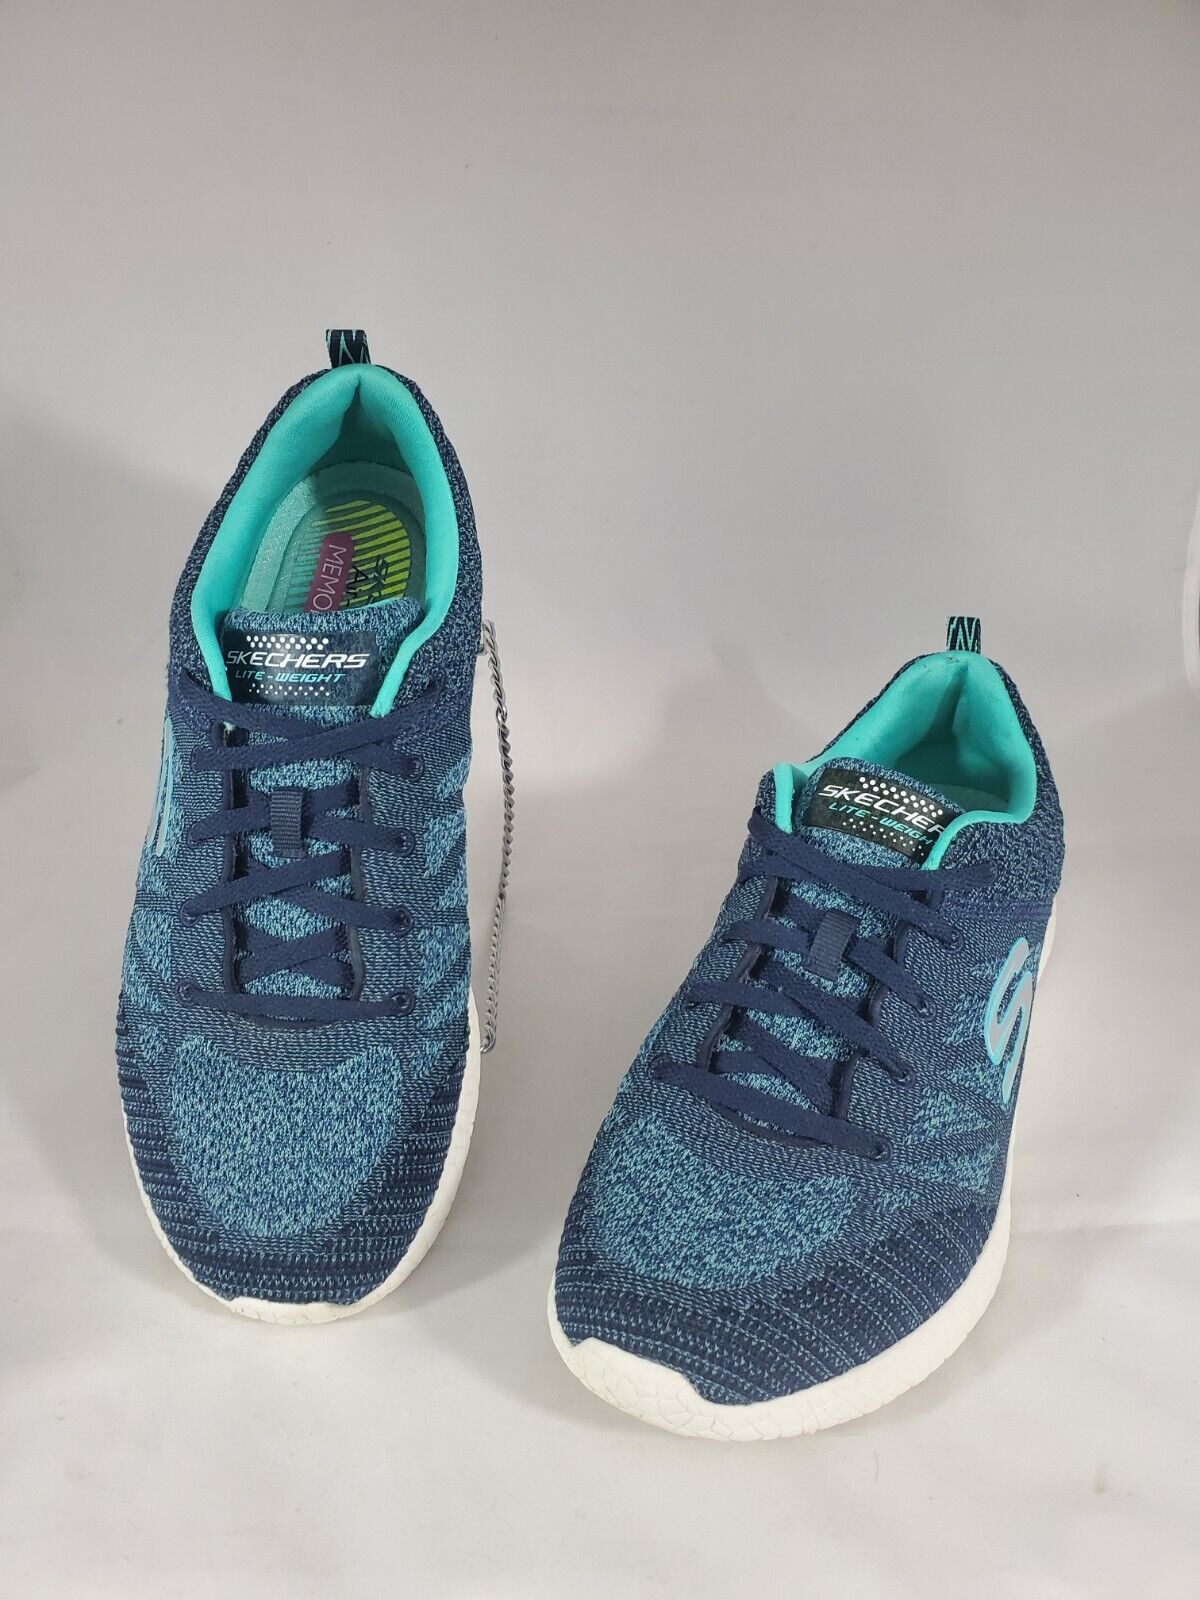 Sip cruzar mercenario Skechers Womens Burst Air Cooled 12433 Blue Running Shoes Sneakers Size 9 |  eBay